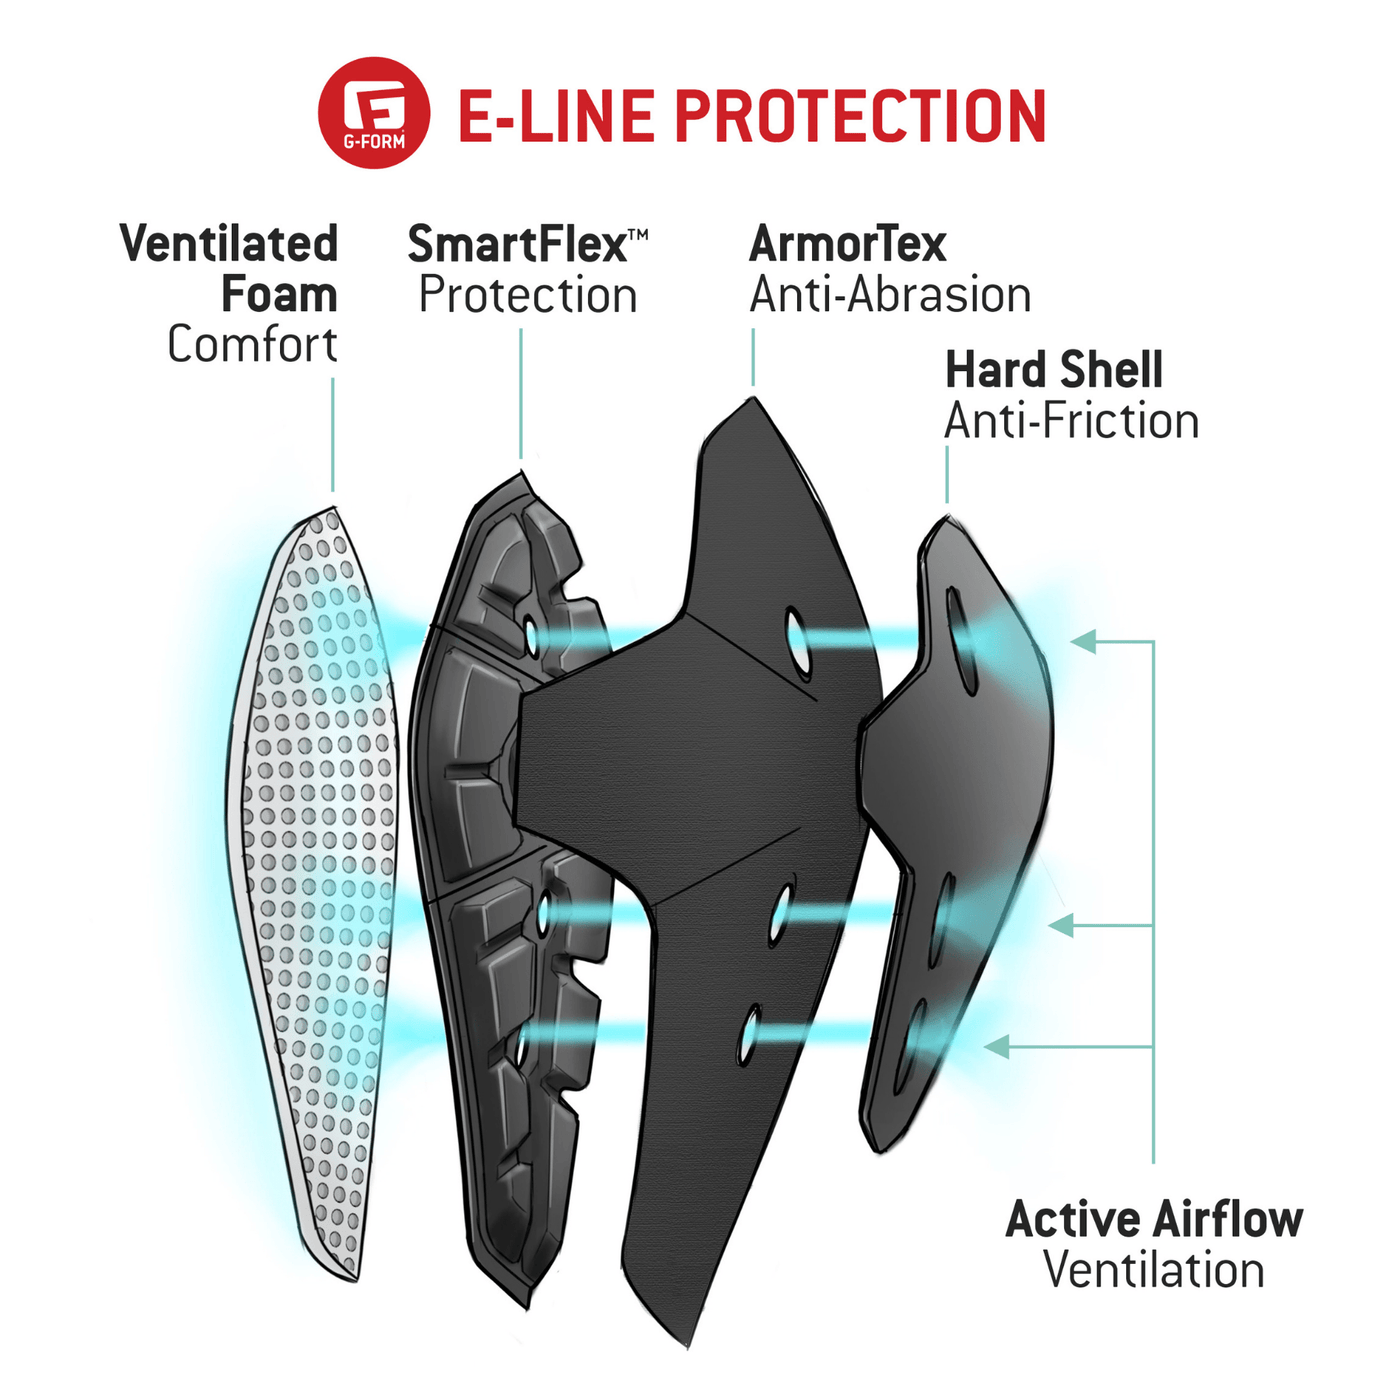 E-Line protection